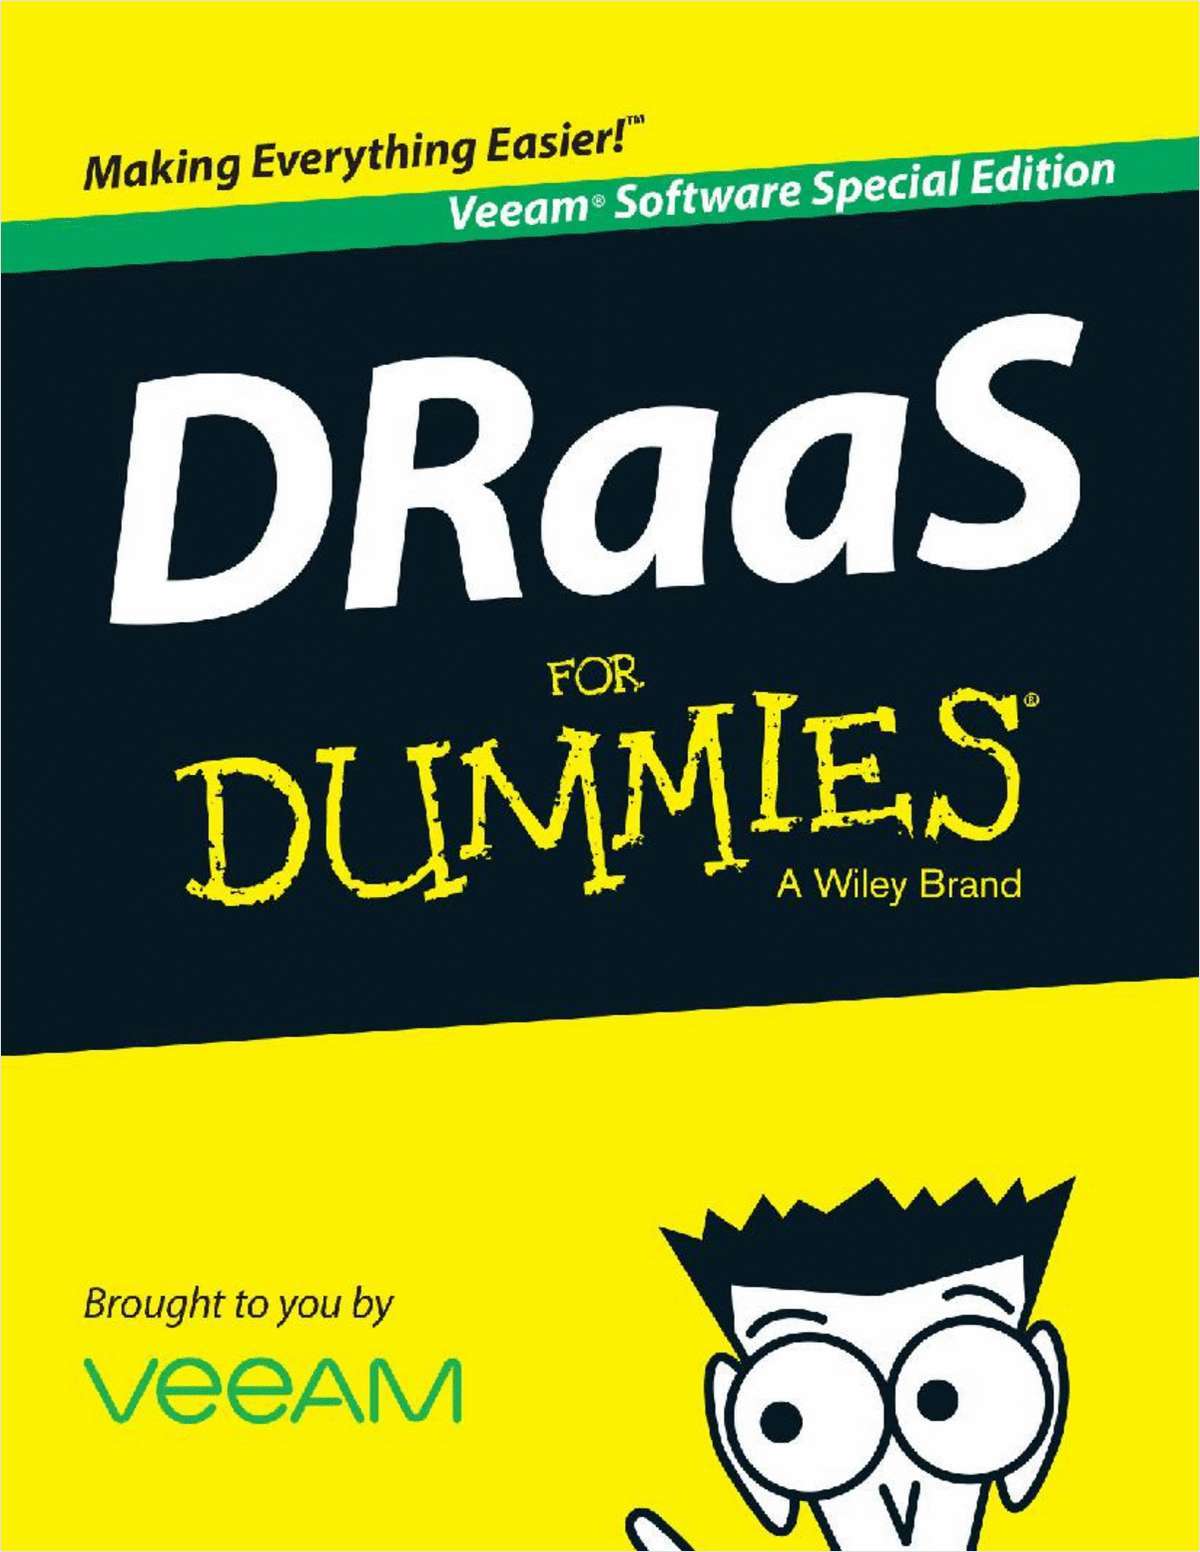 DRaaS for Dummies